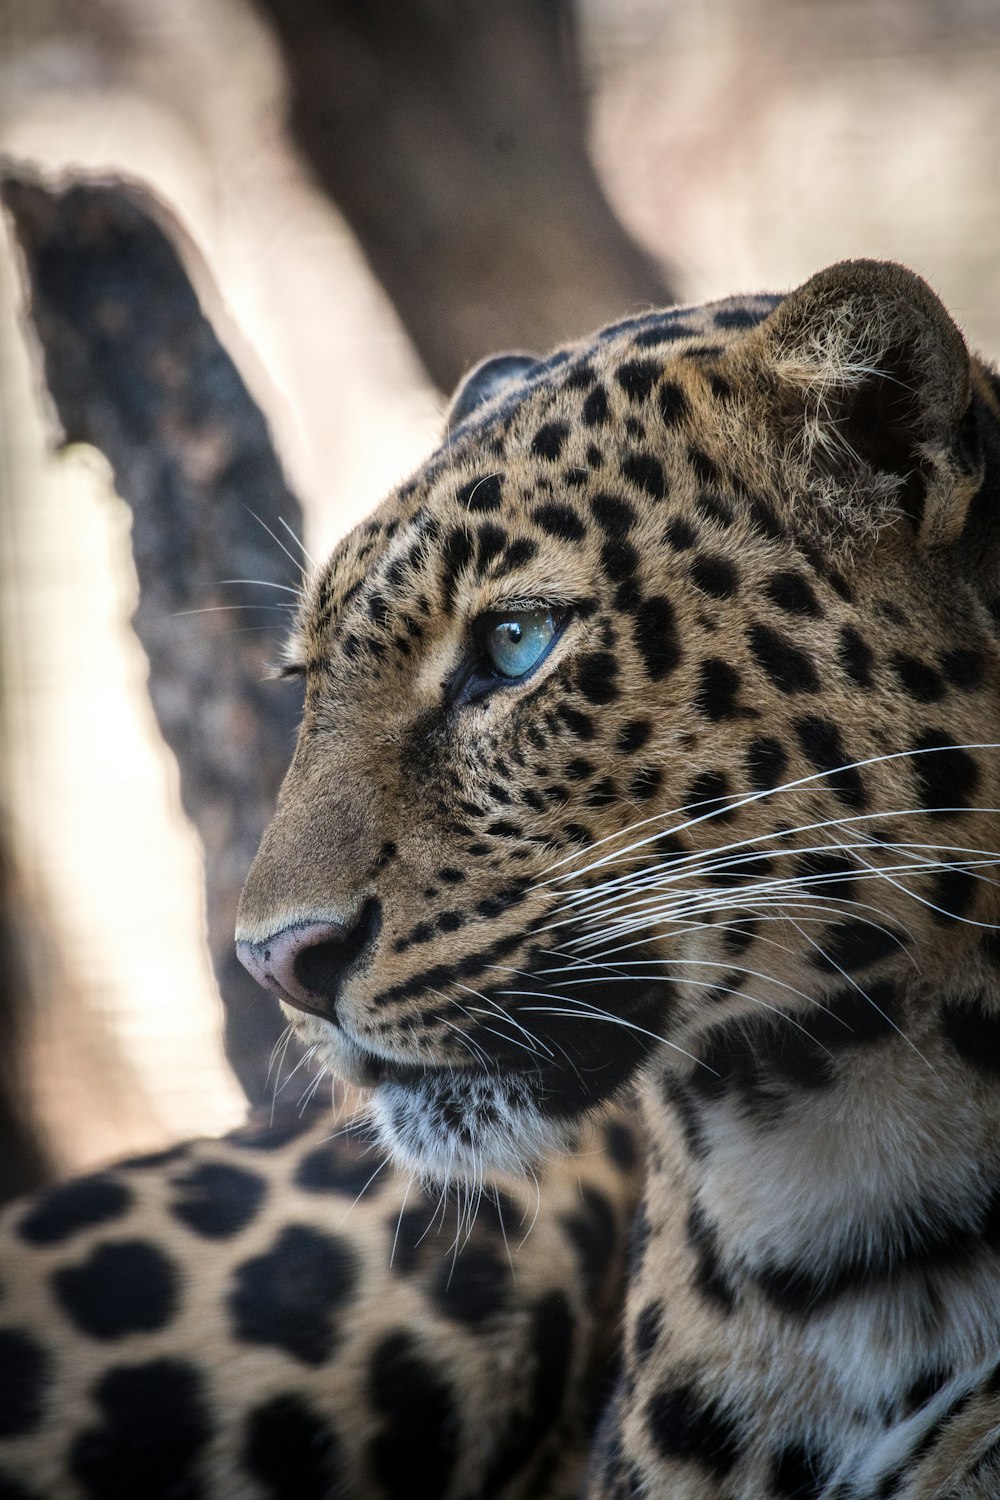 léopard brun et noir